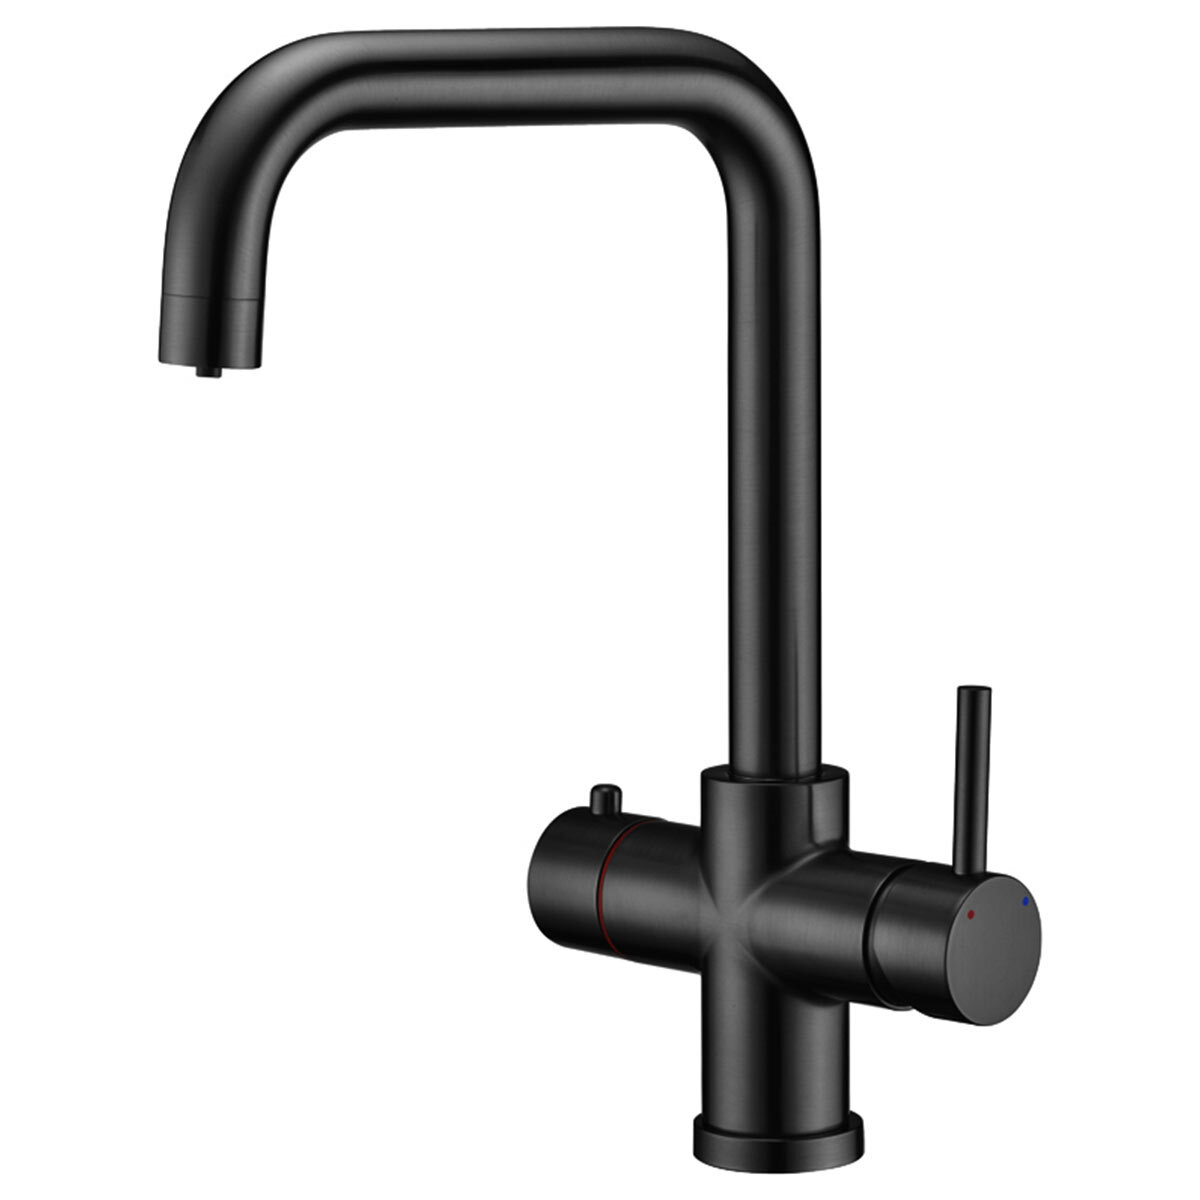 lead image of hot tap in matt black